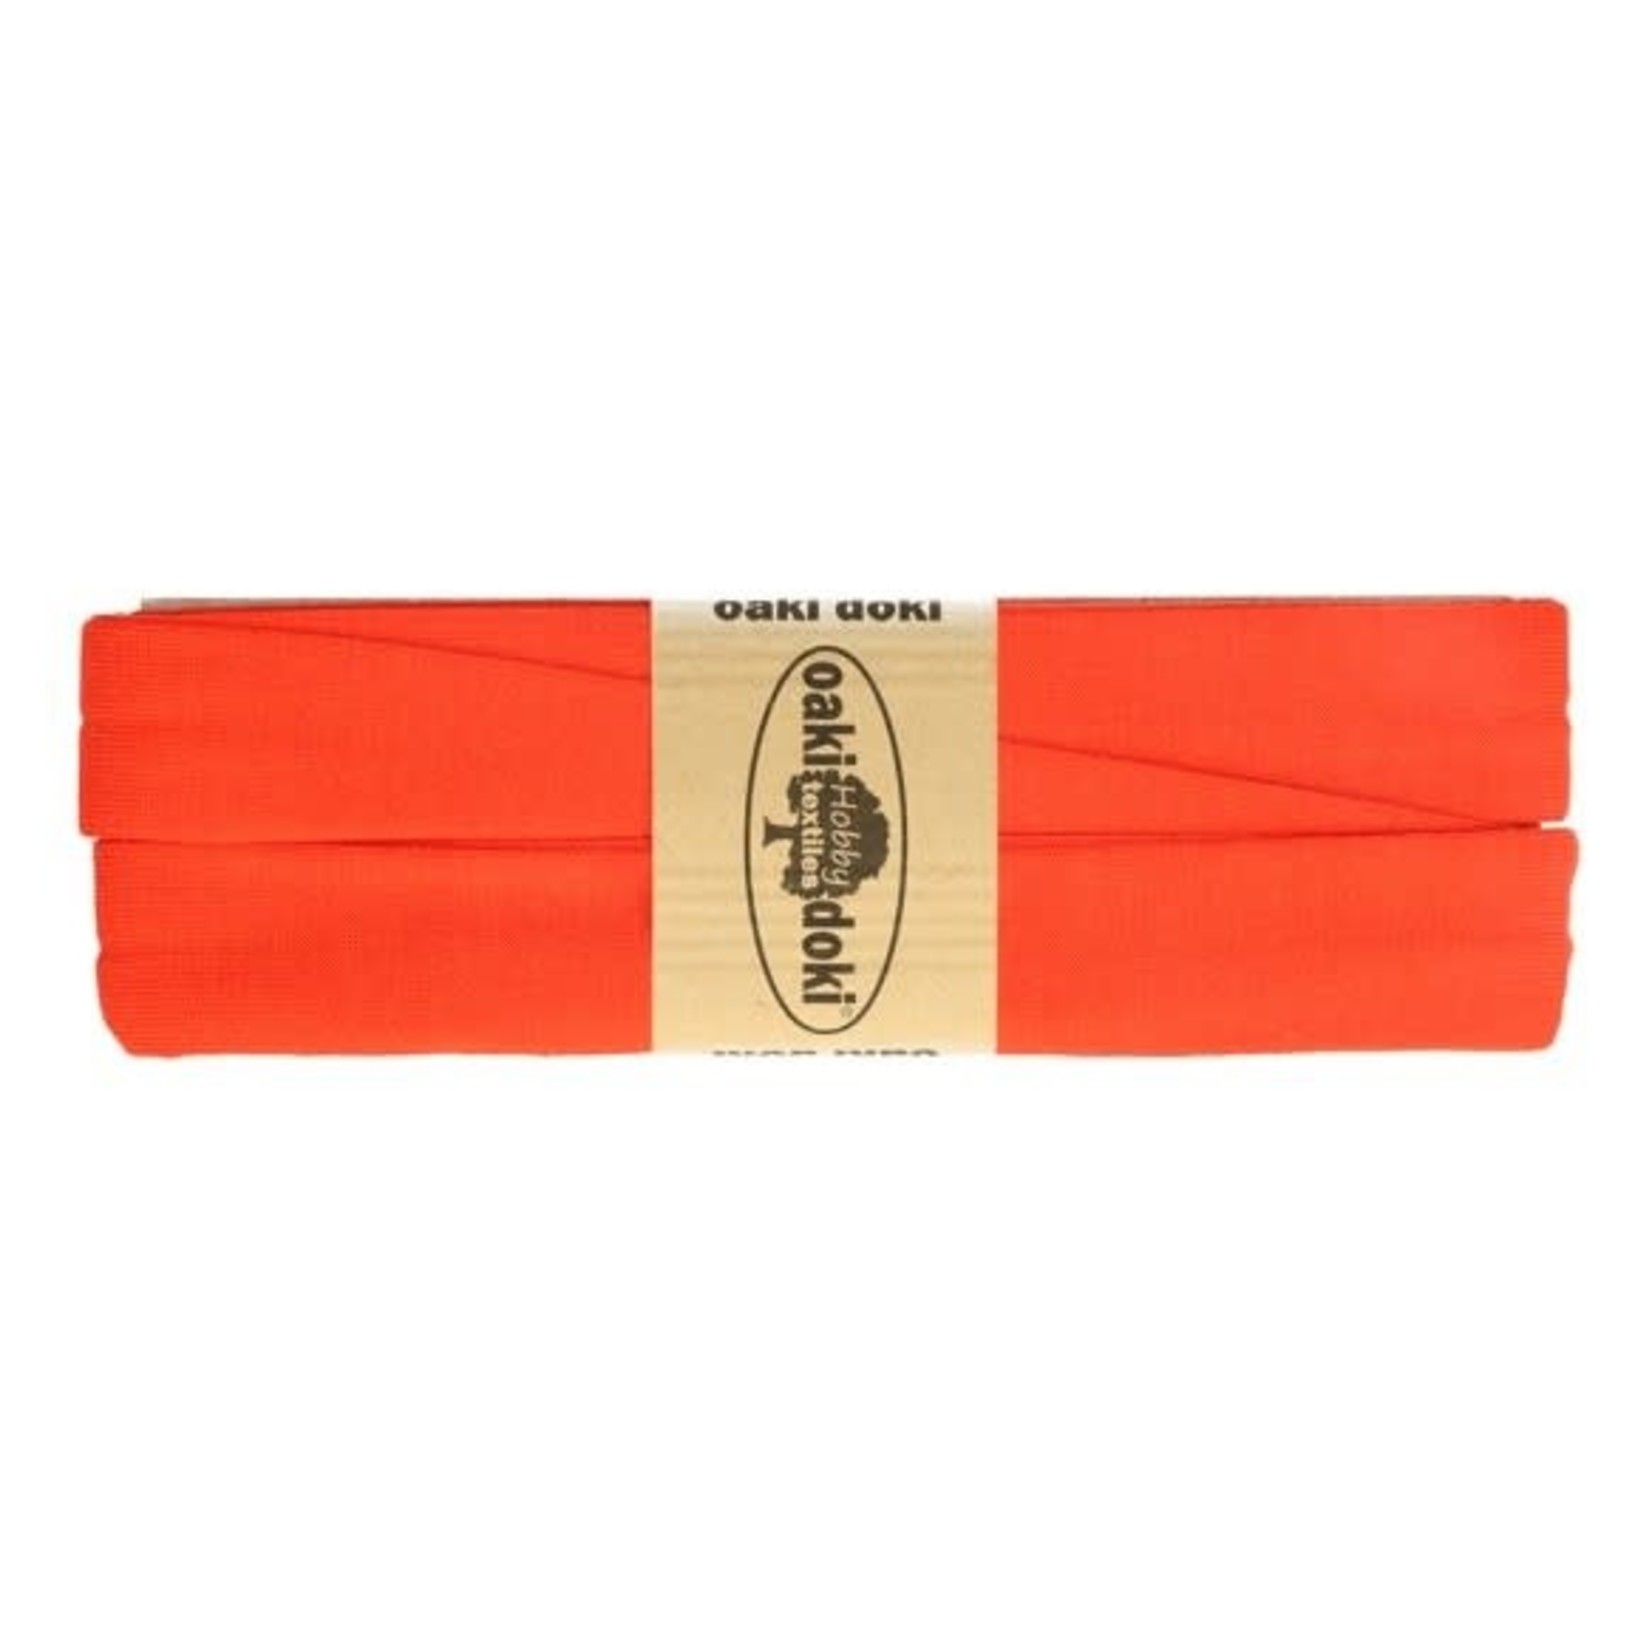 Oaki Doki Tricotbiais de luxe - oranje (935)